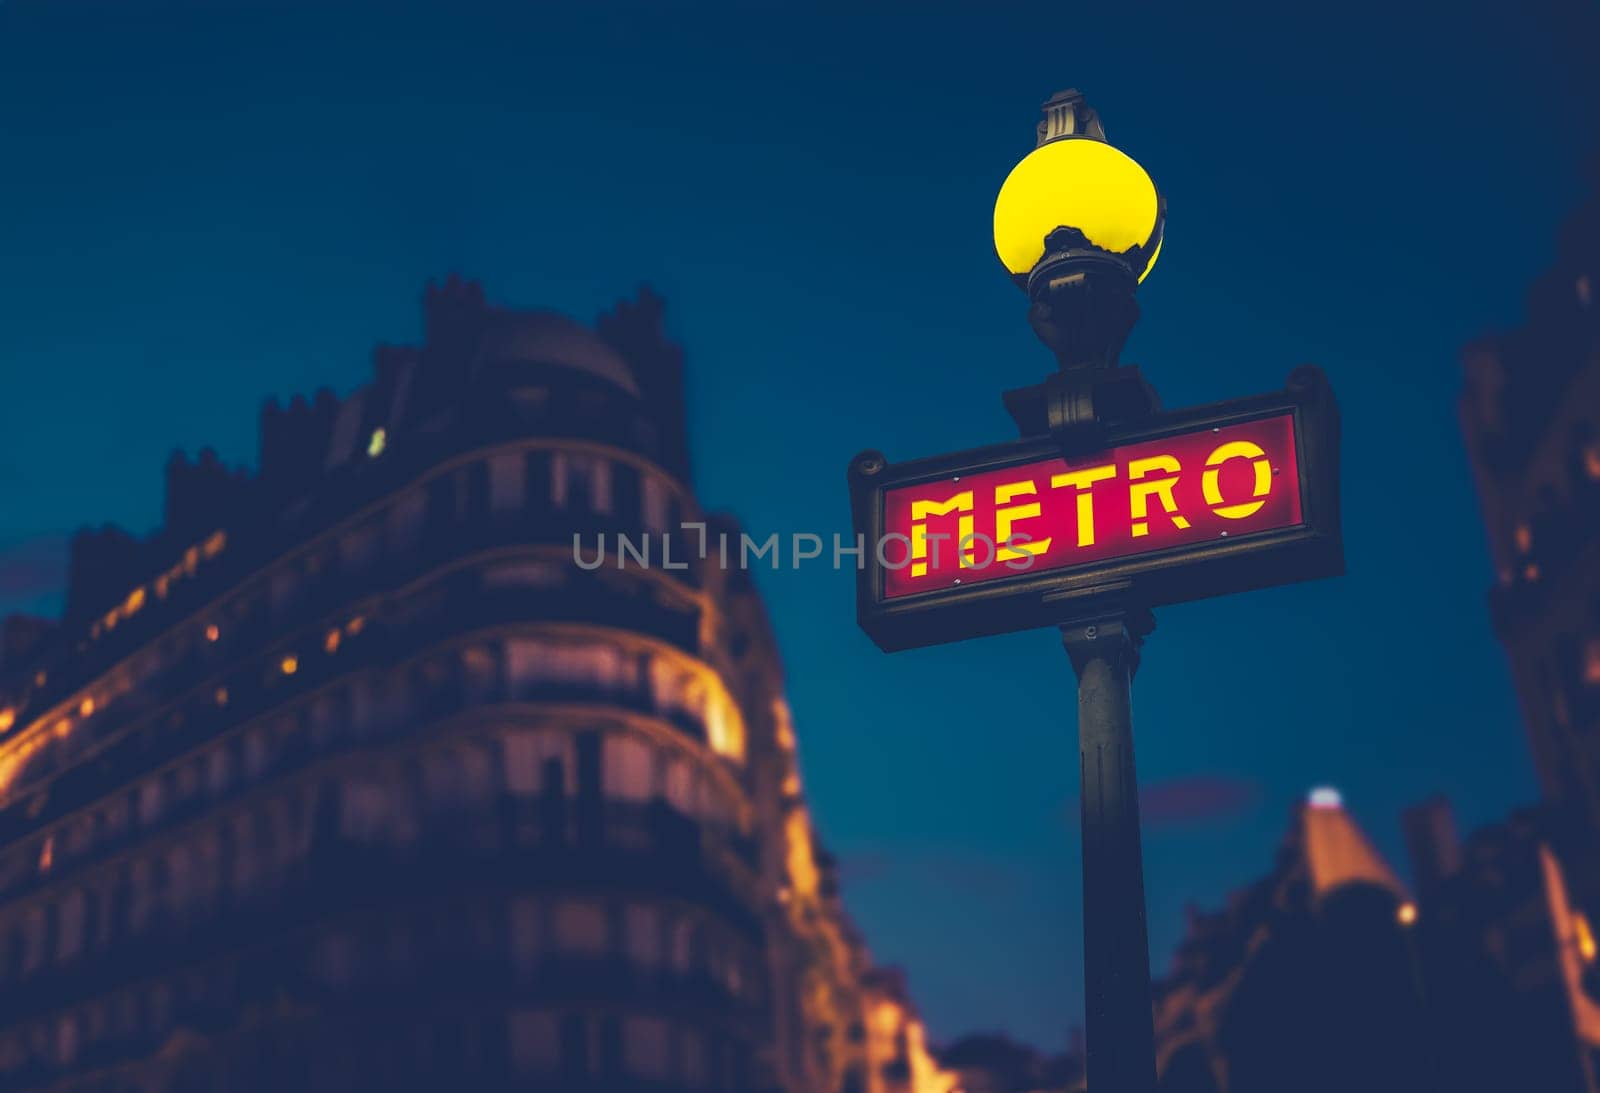 Metro Sign In Paris At Night by mrdoomits